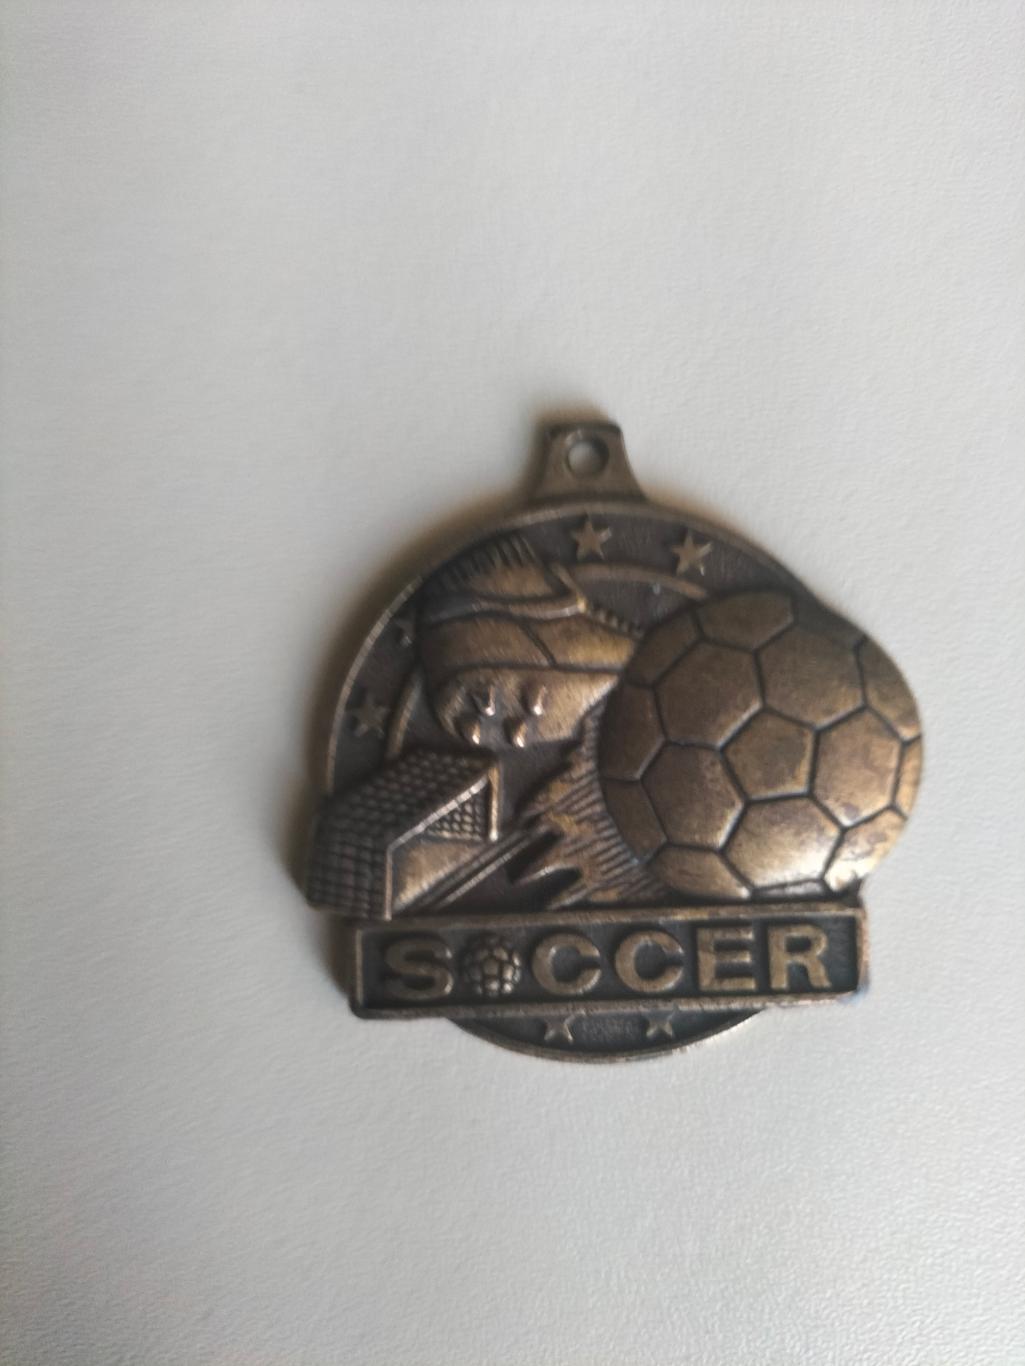 Soccer (медаль) 1